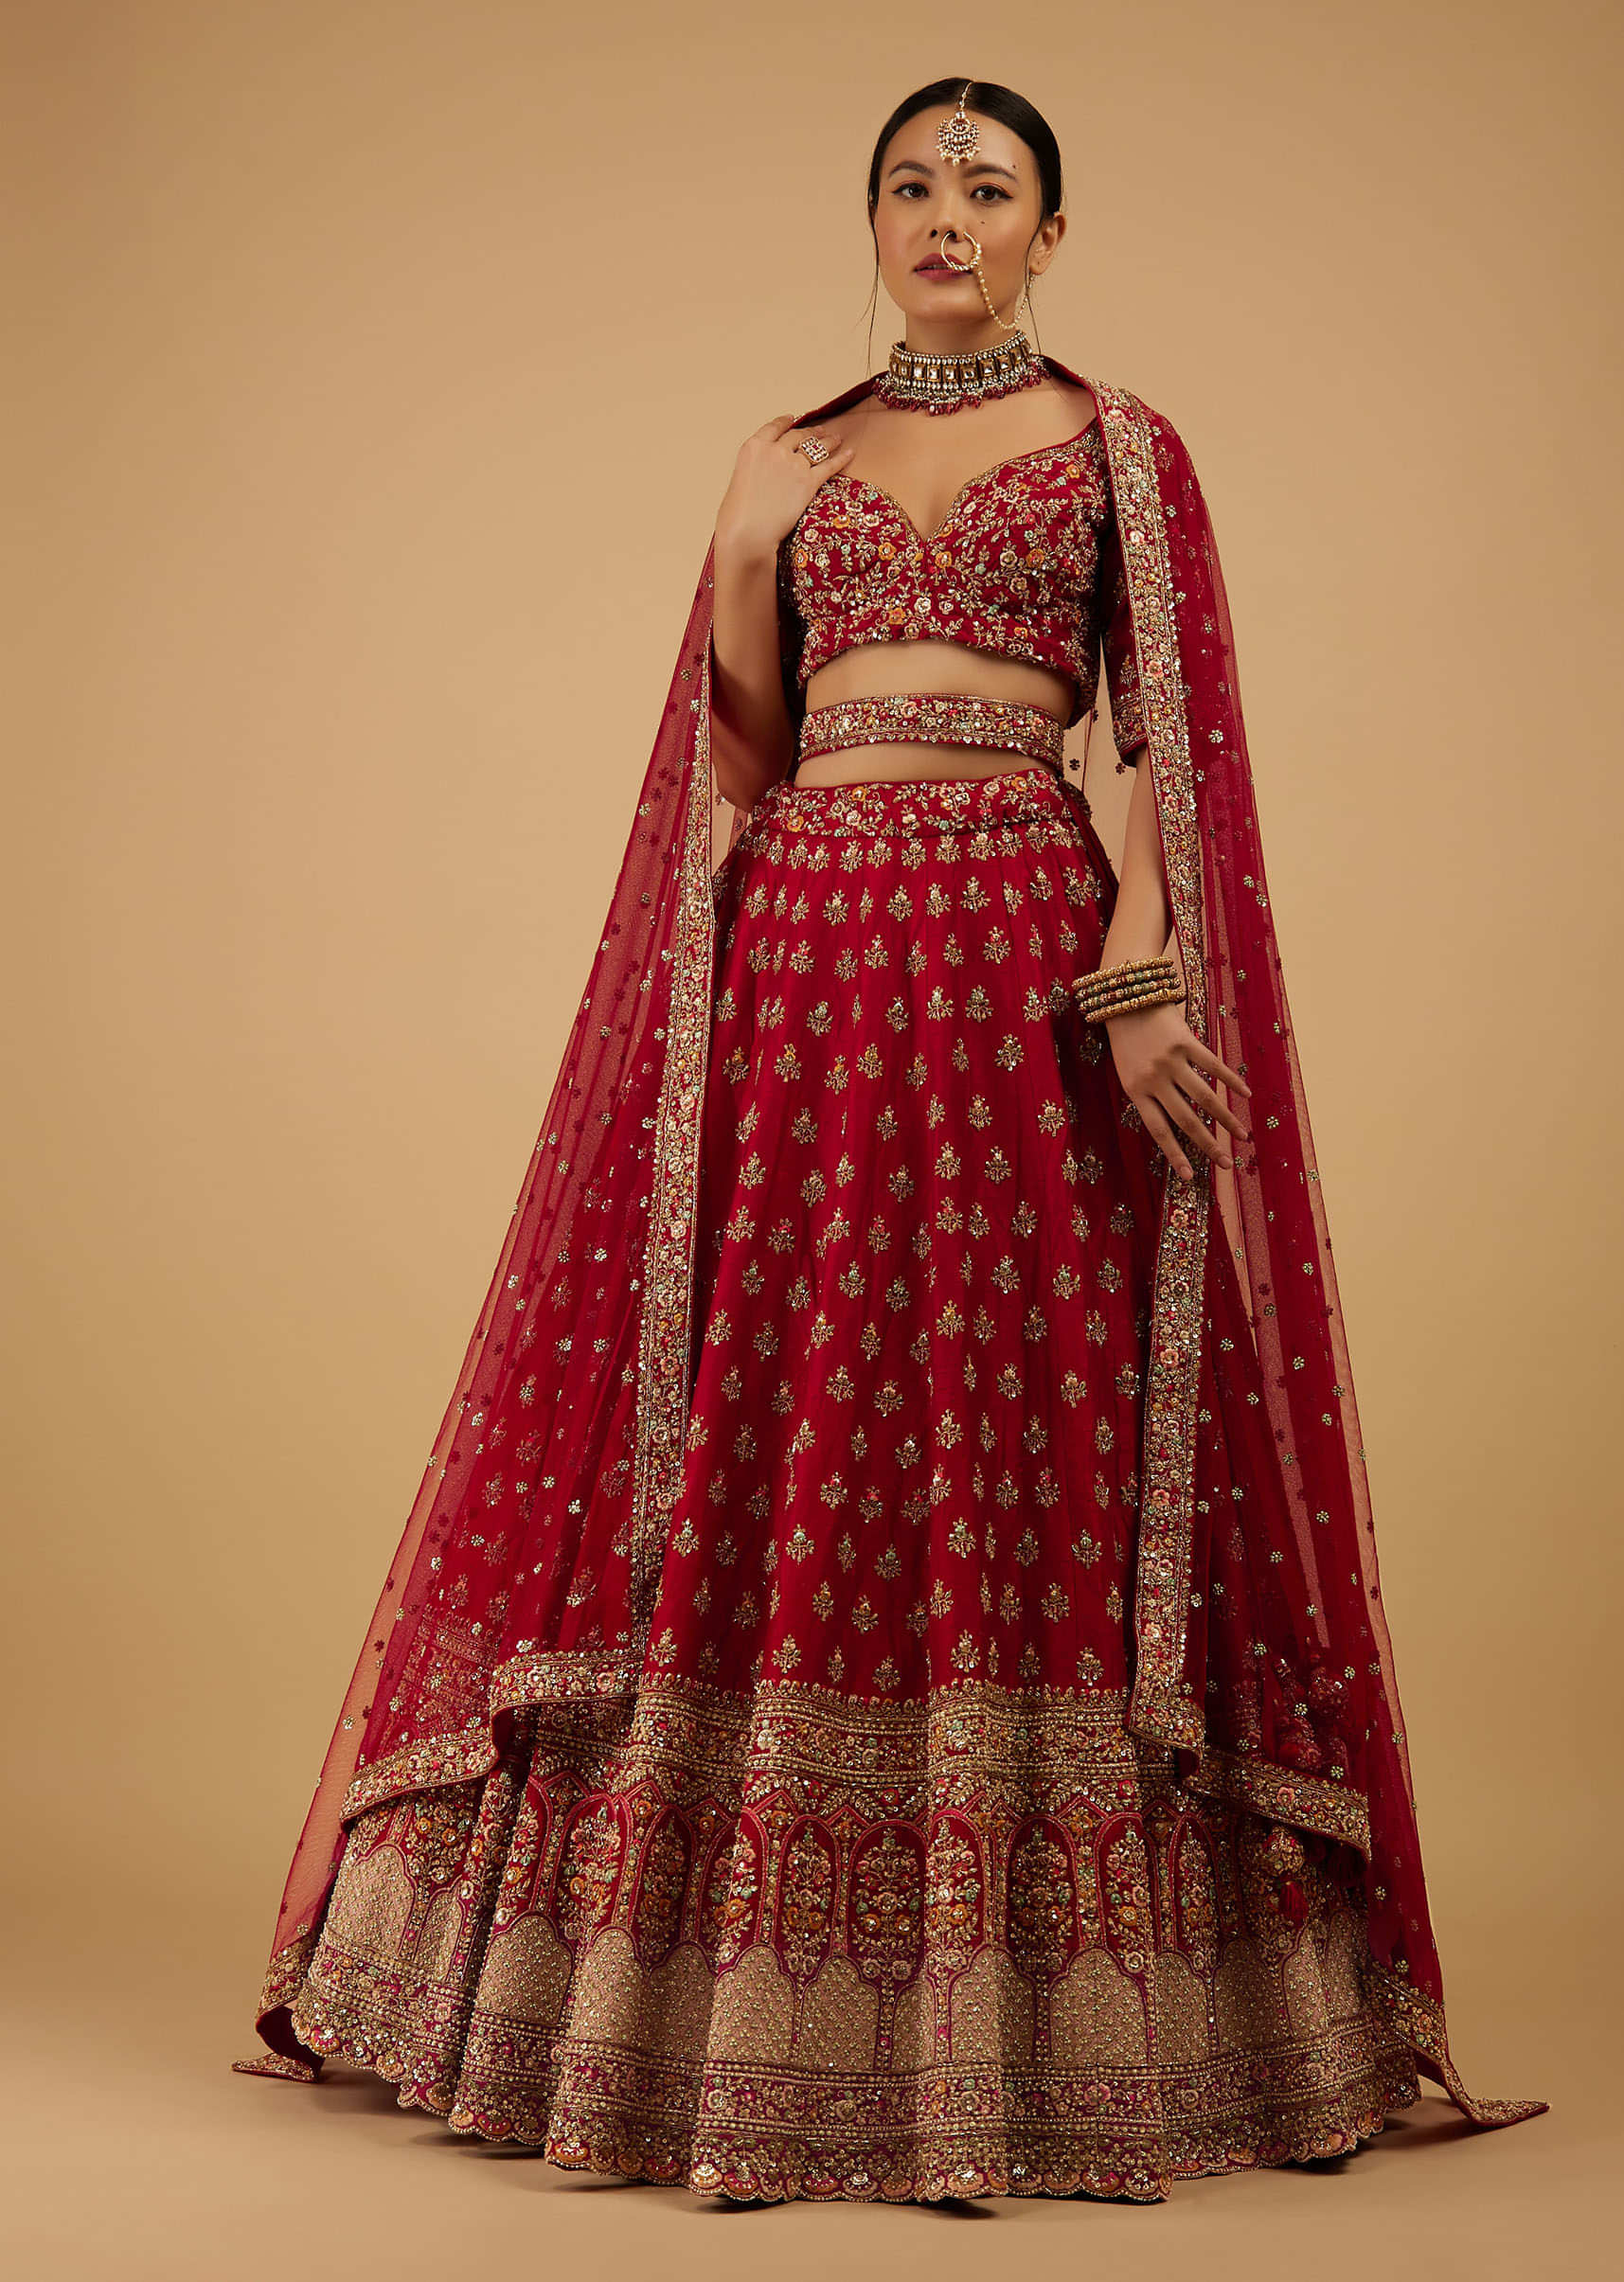 Bride And Baraat Cherry Red Fully Embroidered Lavish Lehenga Choli With Belt